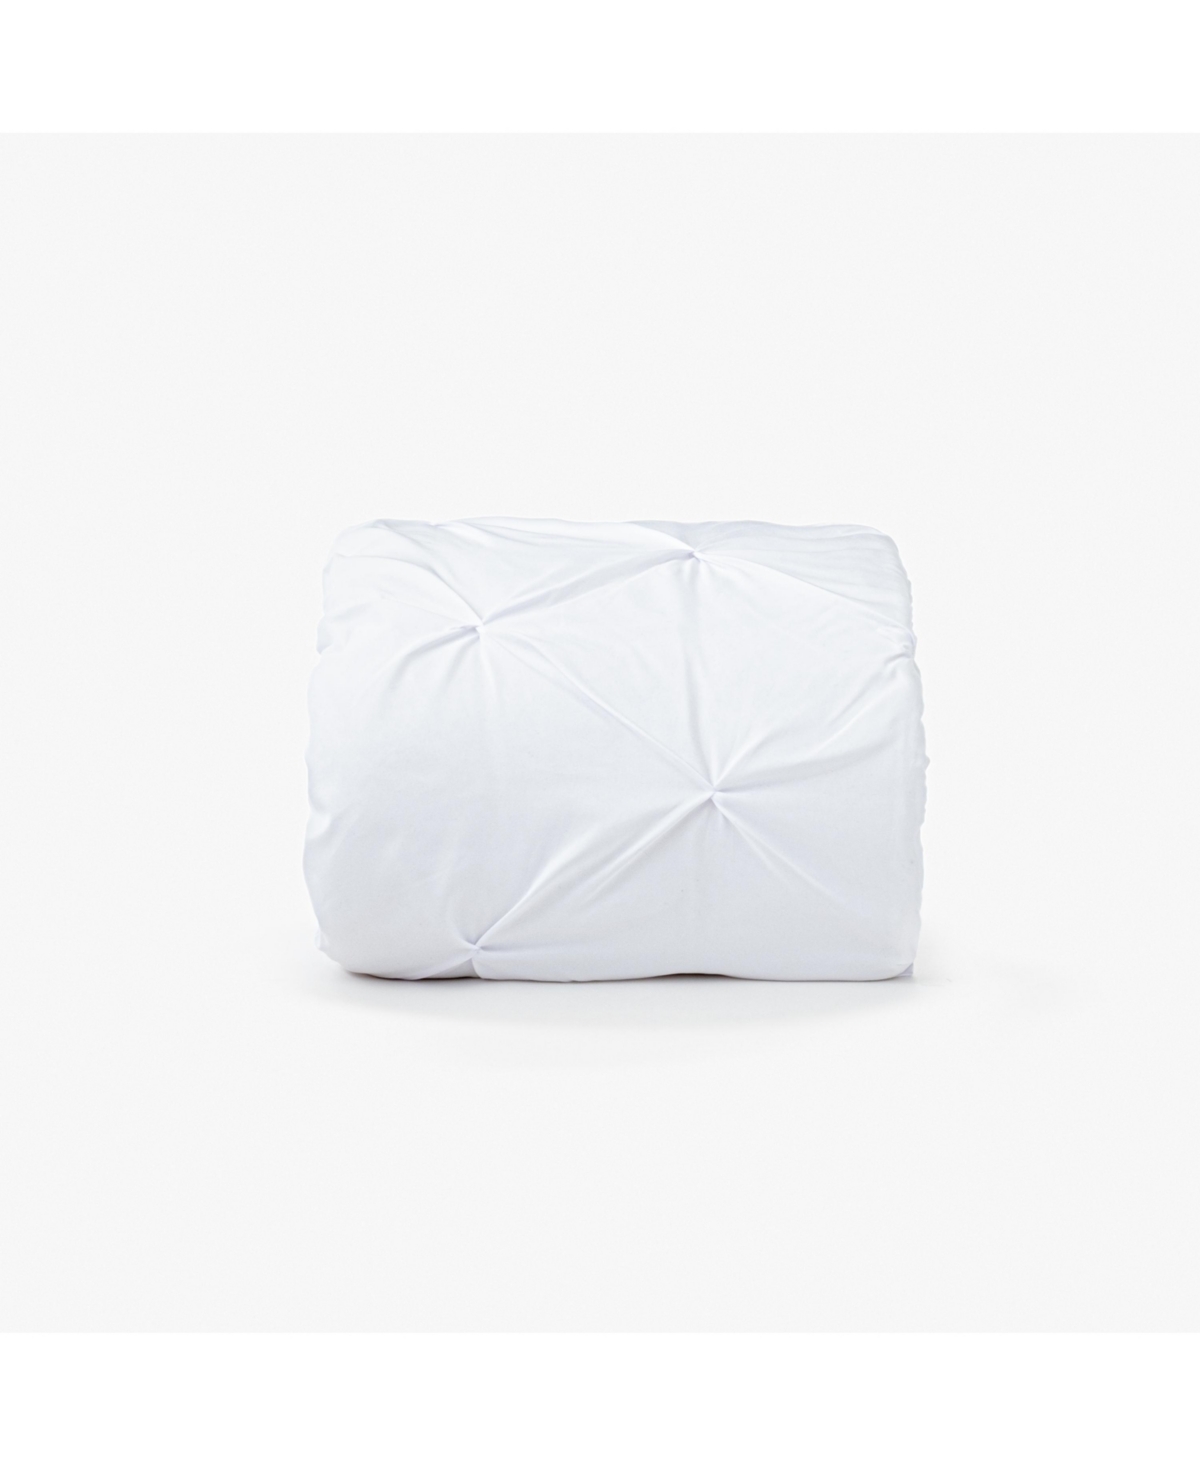 Ocm Fully Reversible Microfiber College Dorm Comforter In Twin/twin Xl In White Kiss Pleat